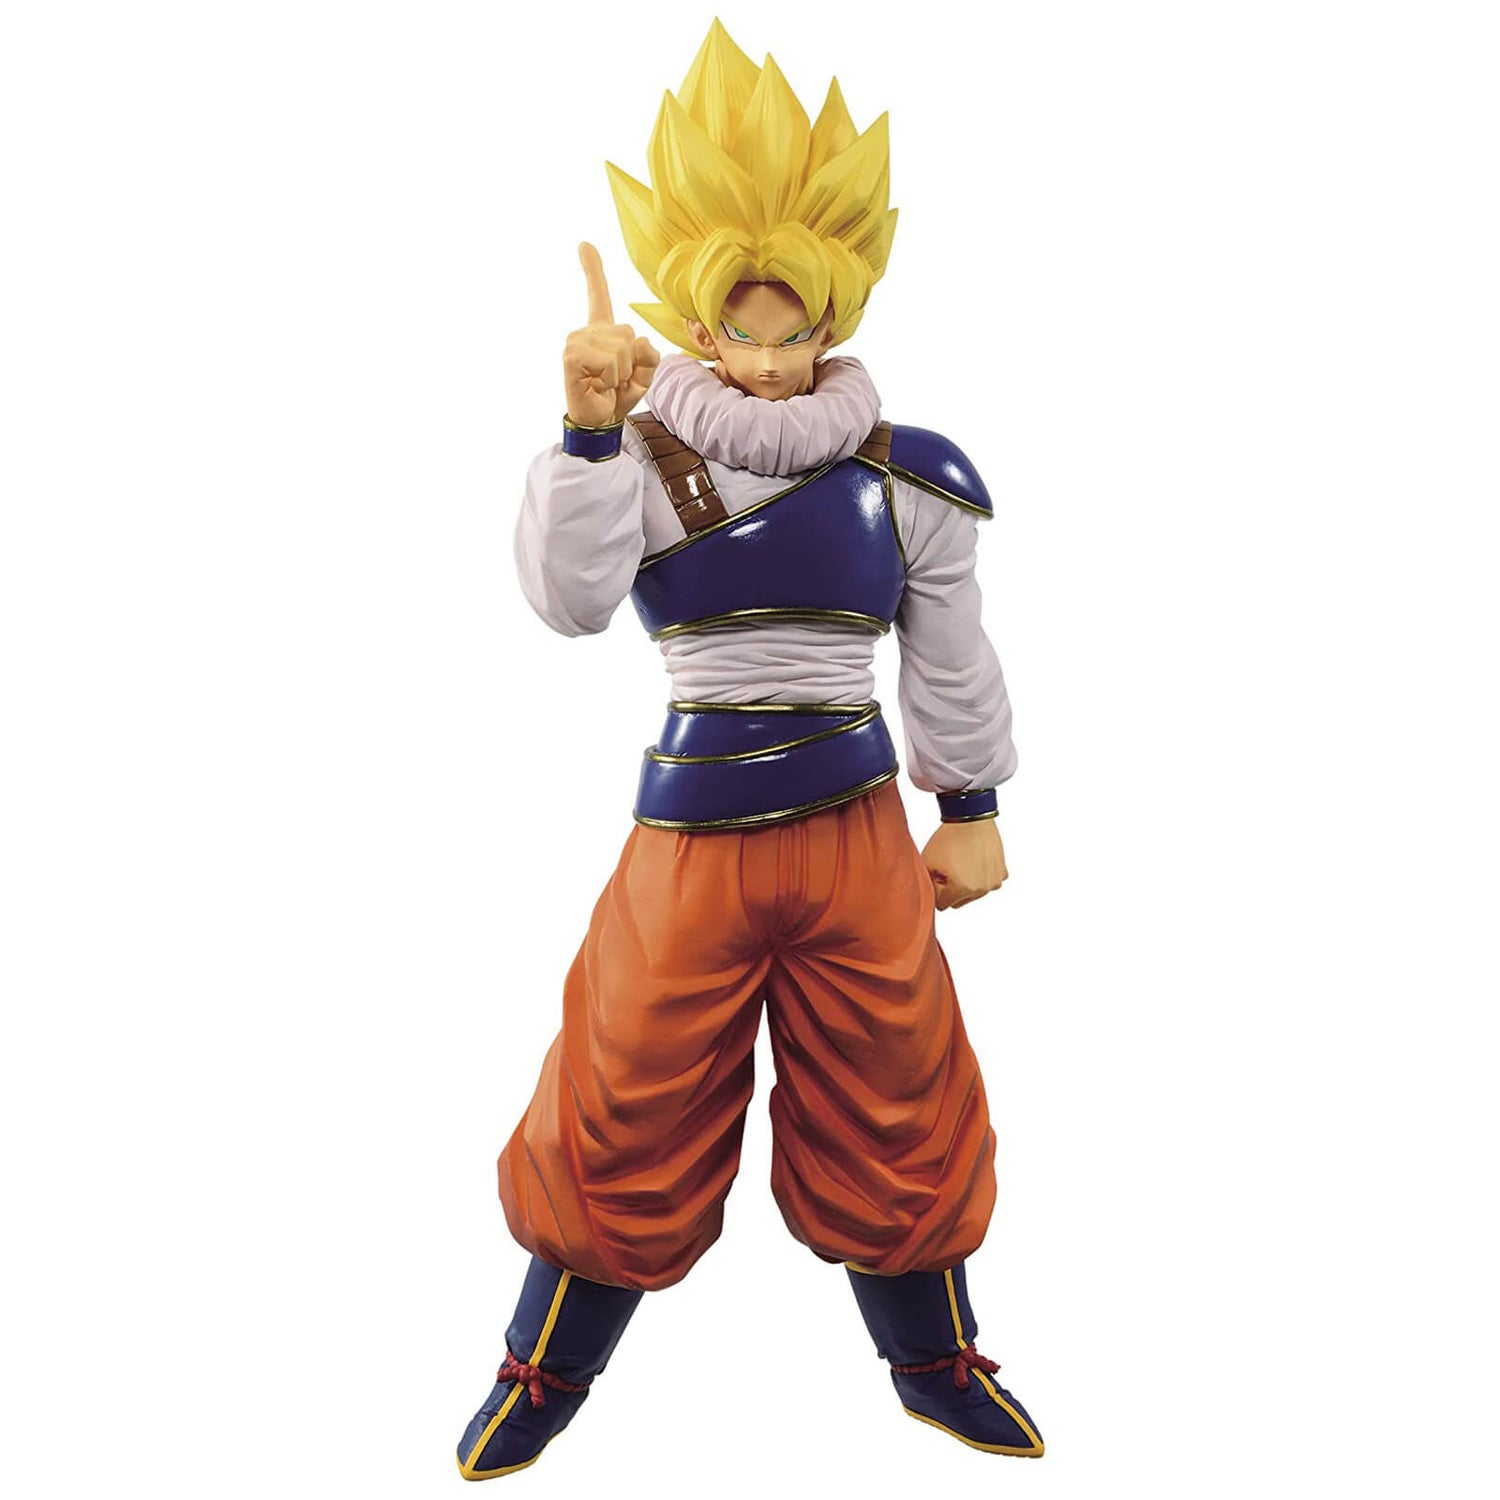 Banpresto Dragon Ball Legends Collab-Son Goku Statue